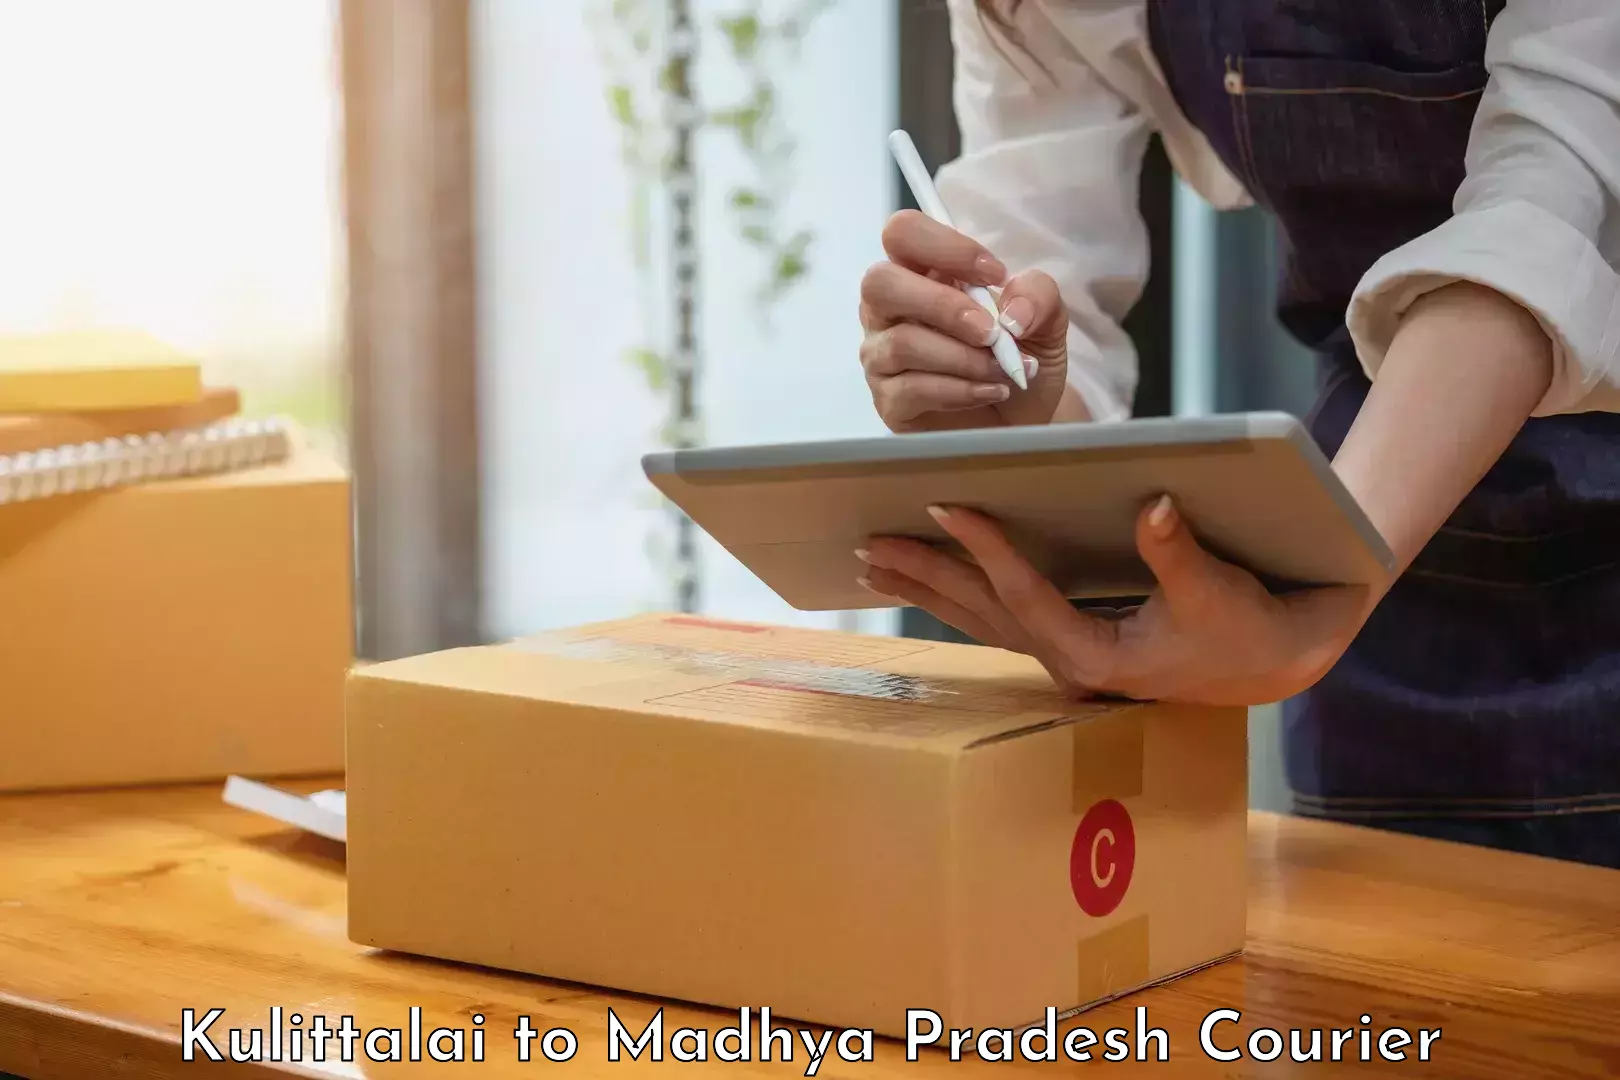 Express mail service in Kulittalai to Madhya Pradesh